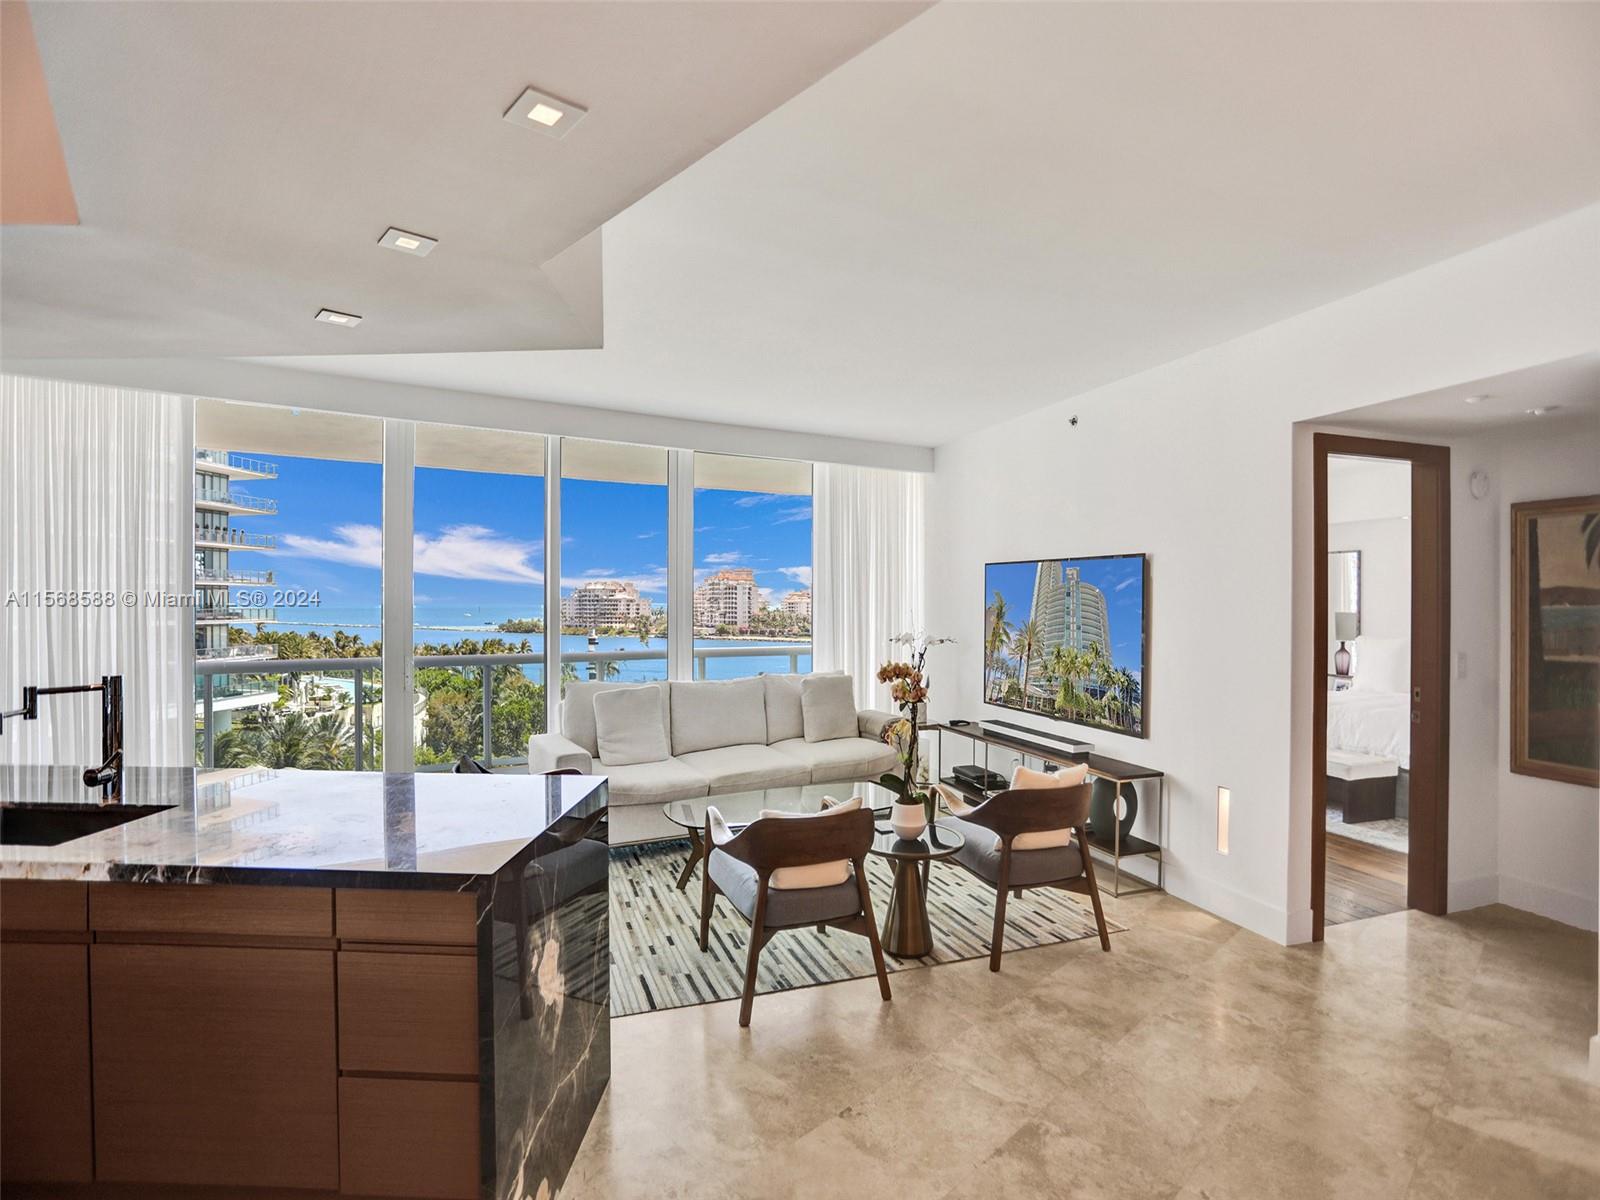 Property for Sale at 1000 S Pointe Dr 705, Miami Beach, Miami-Dade County, Florida - Bedrooms: 2 
Bathrooms: 2.5  - $2,999,000